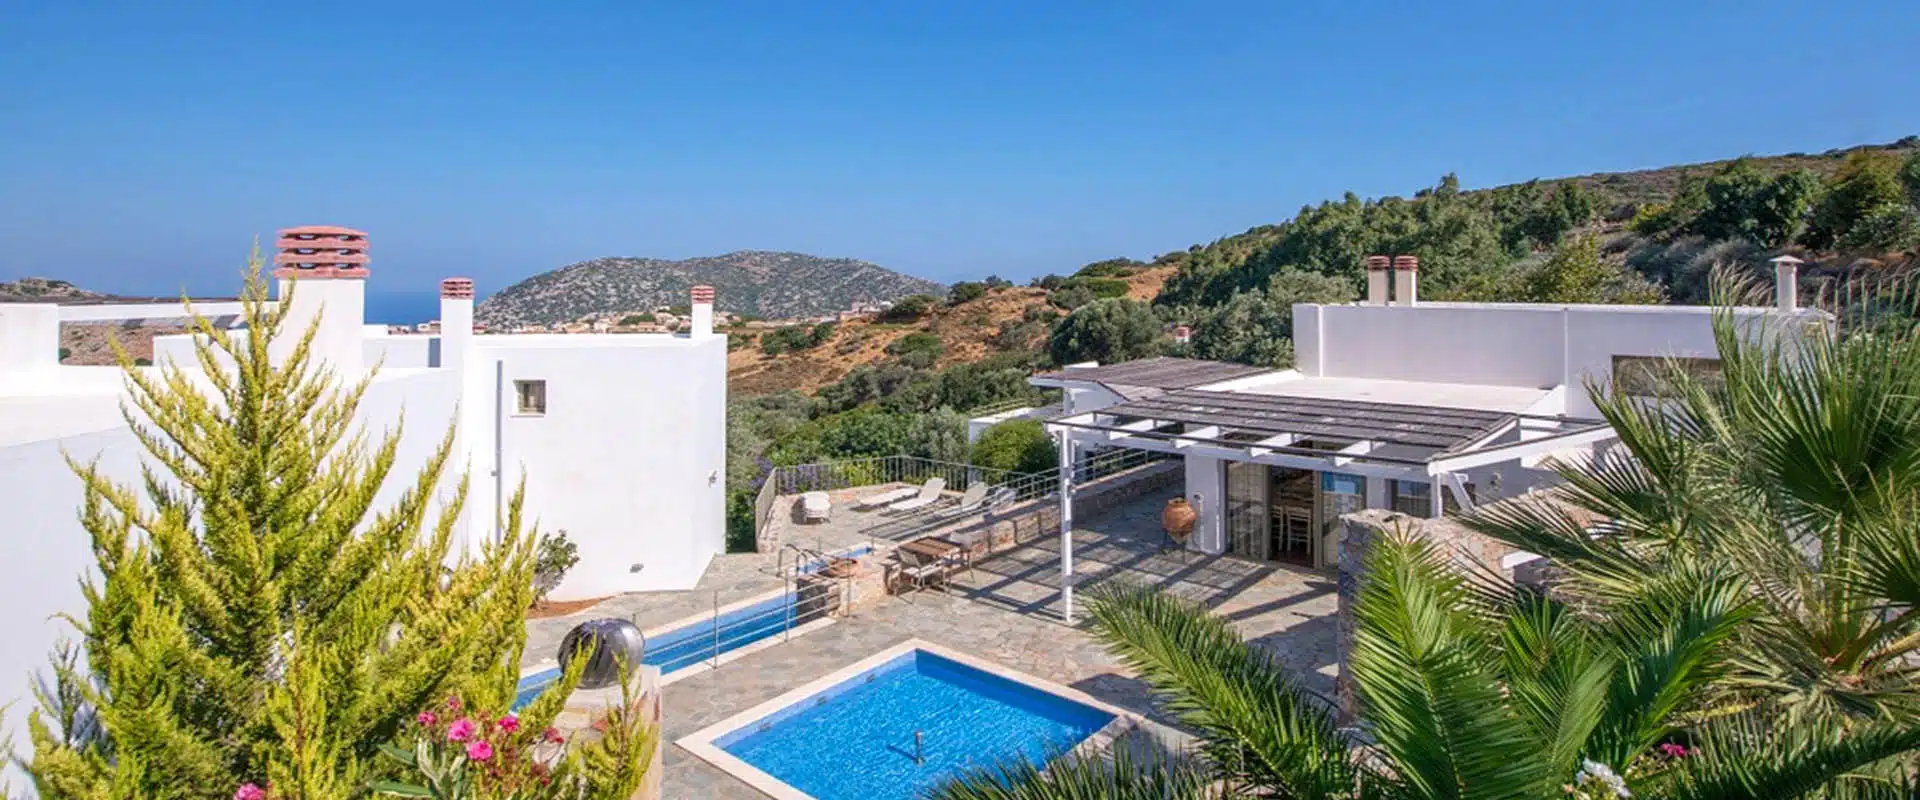 ecotourism holiday hotel sustainable tourism Crete Greece